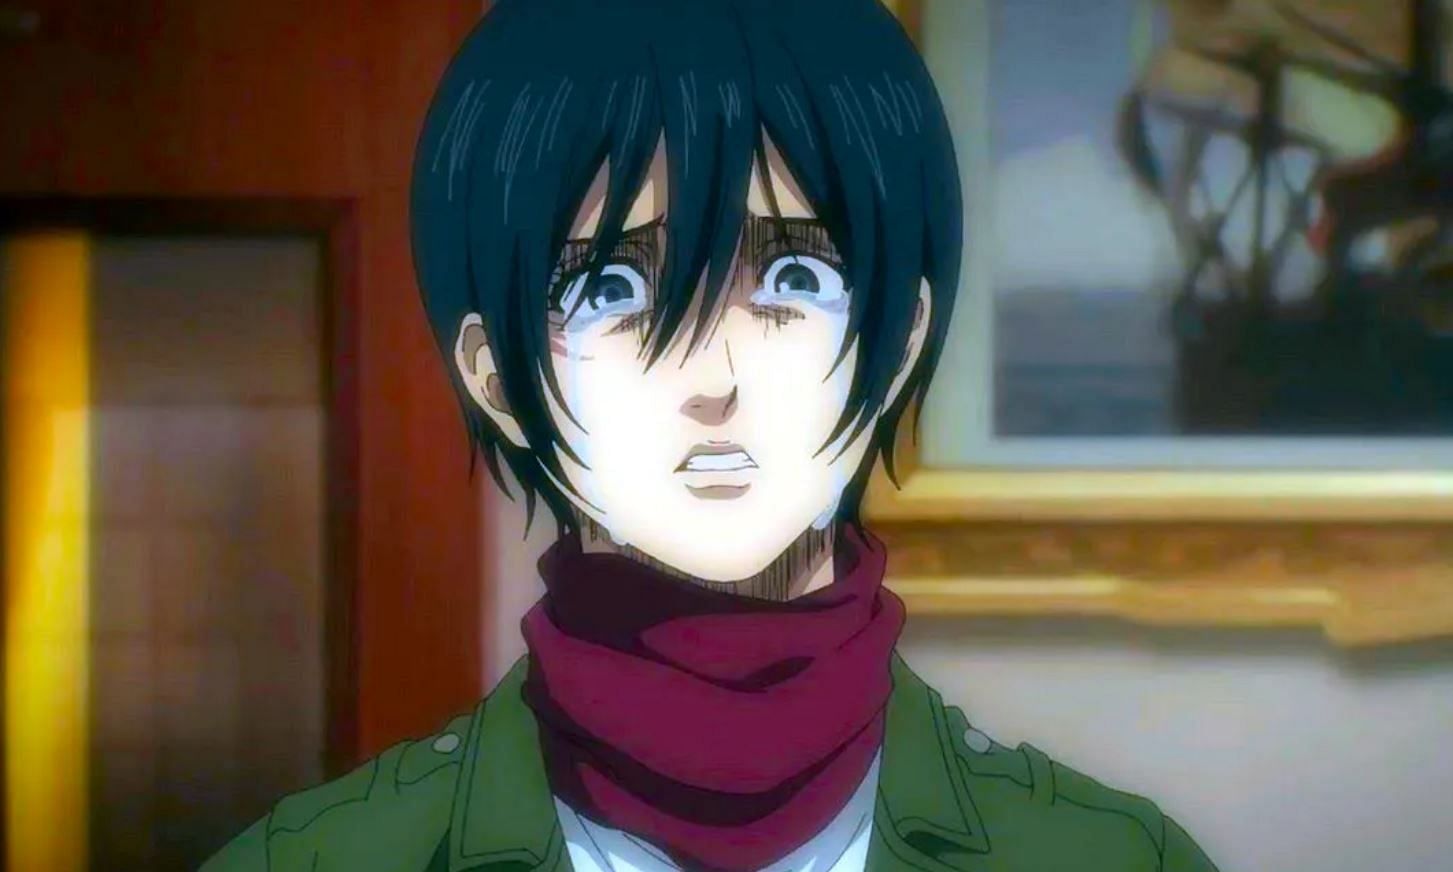 Mikasa as seen in the anime (Image via MAPPA)